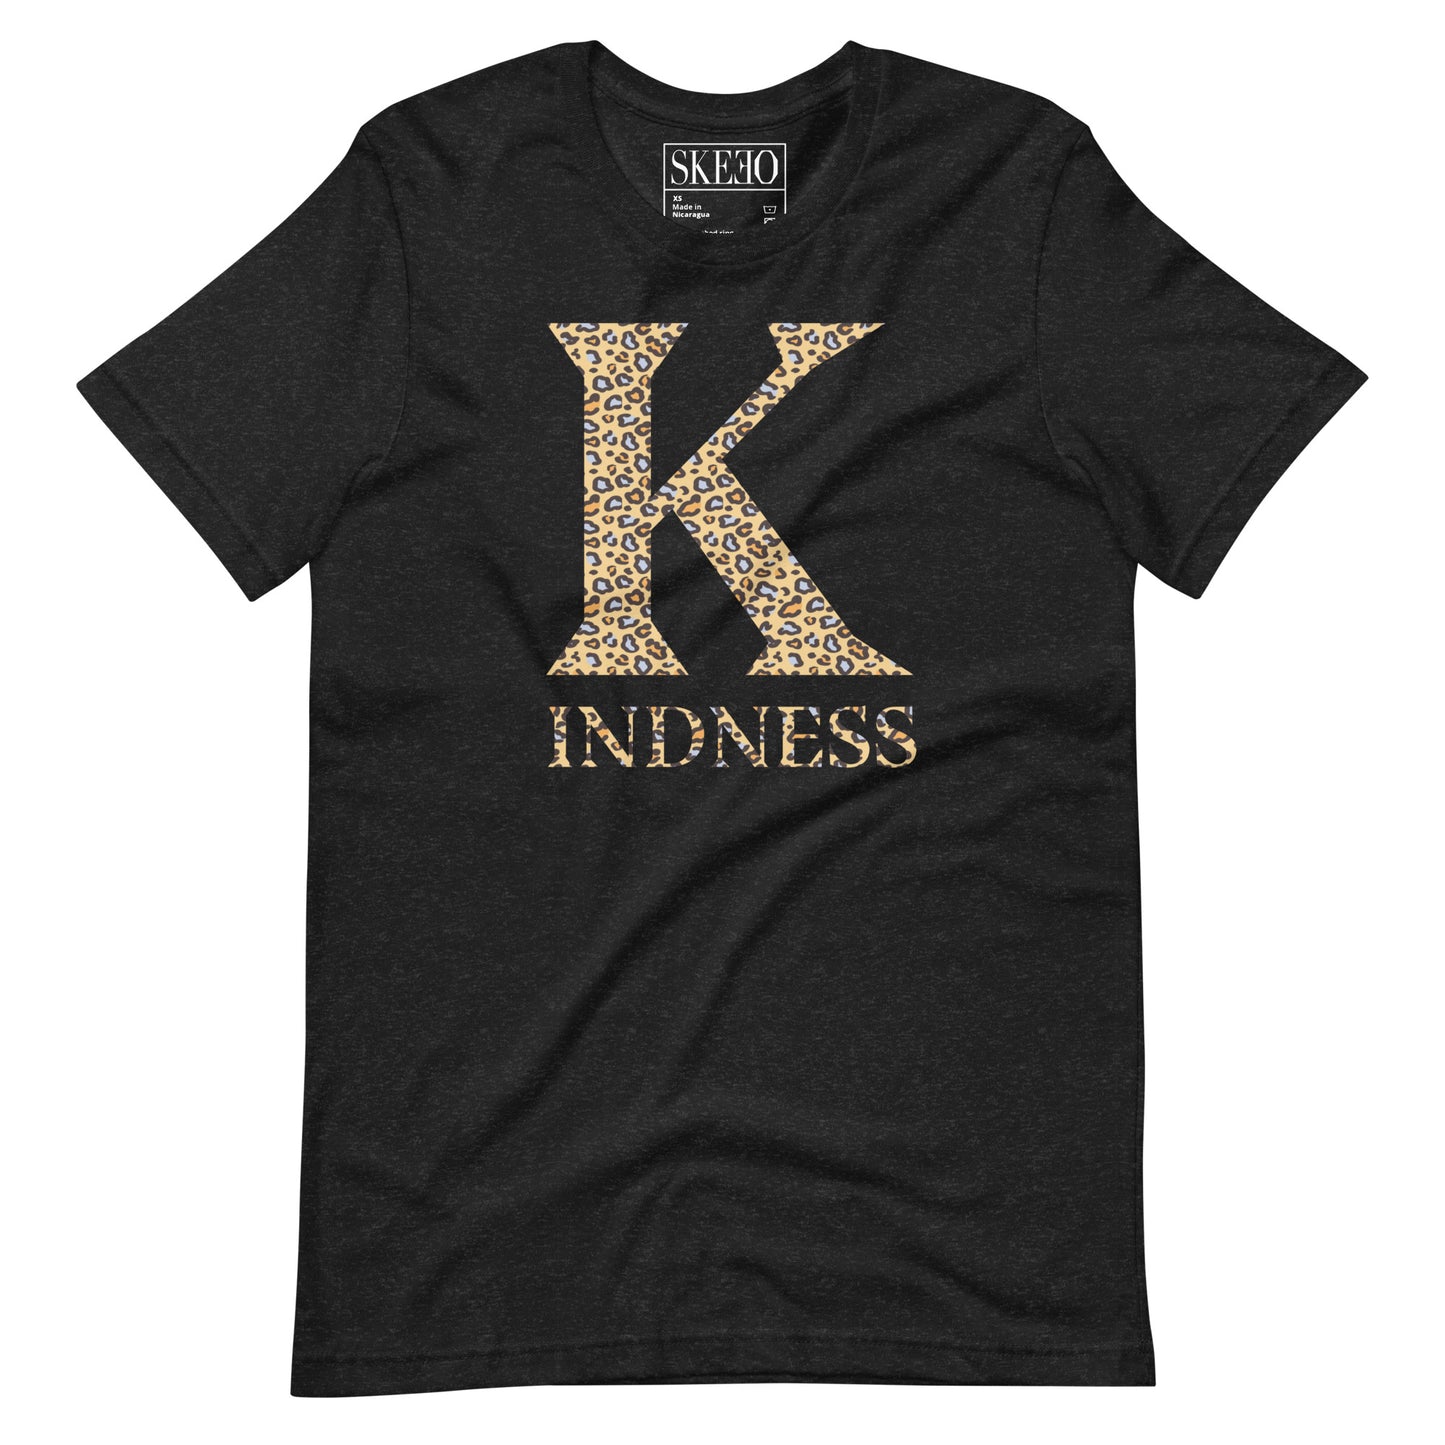 A A SK Kindness t-shirt